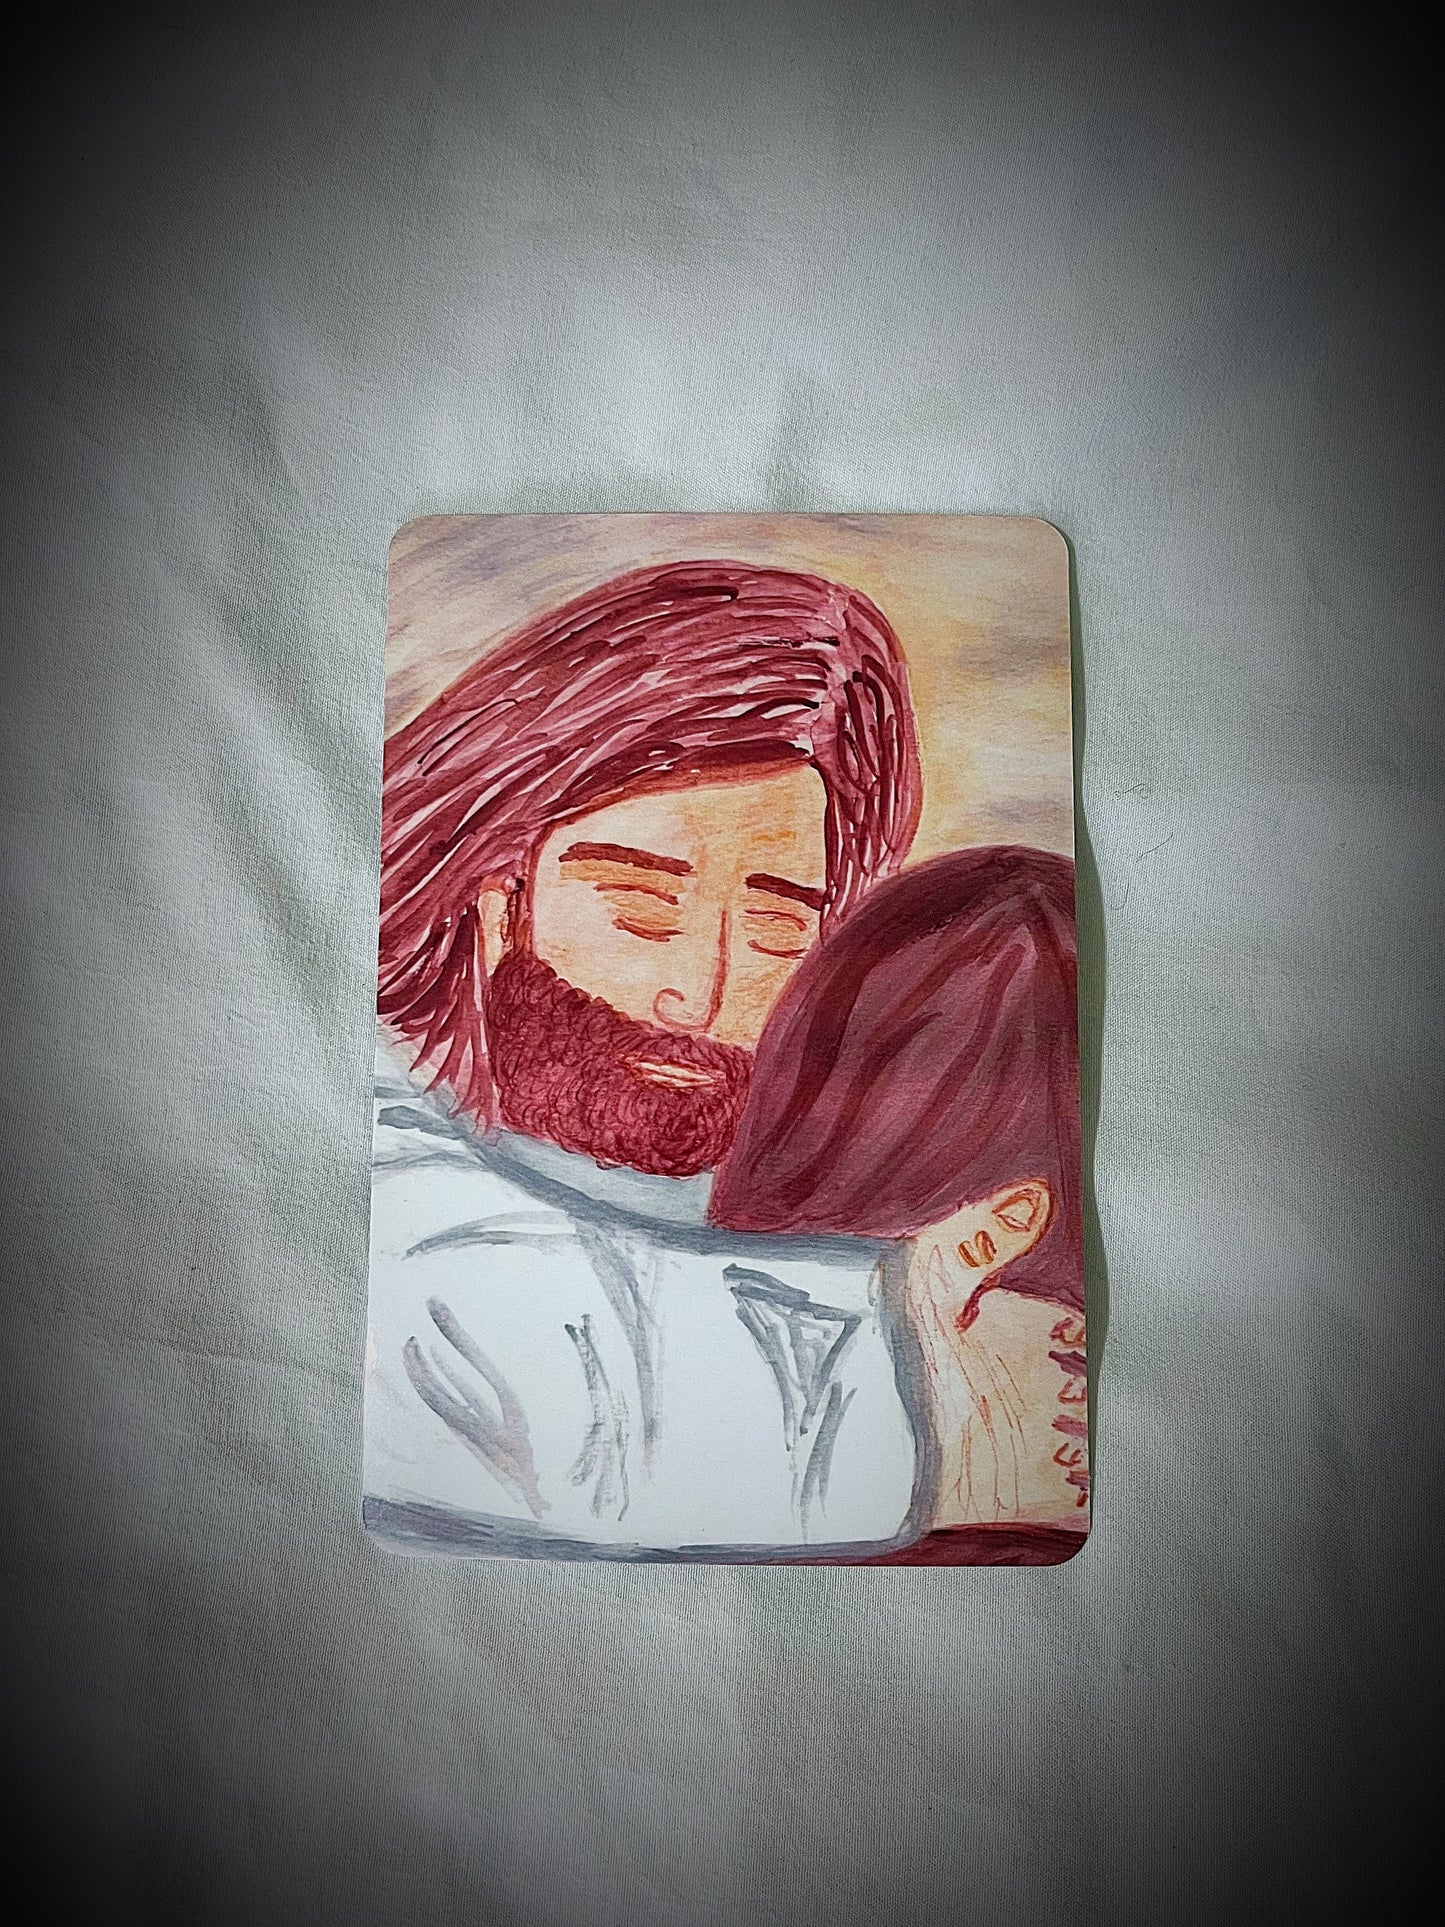 Jesus and His Love prayer card